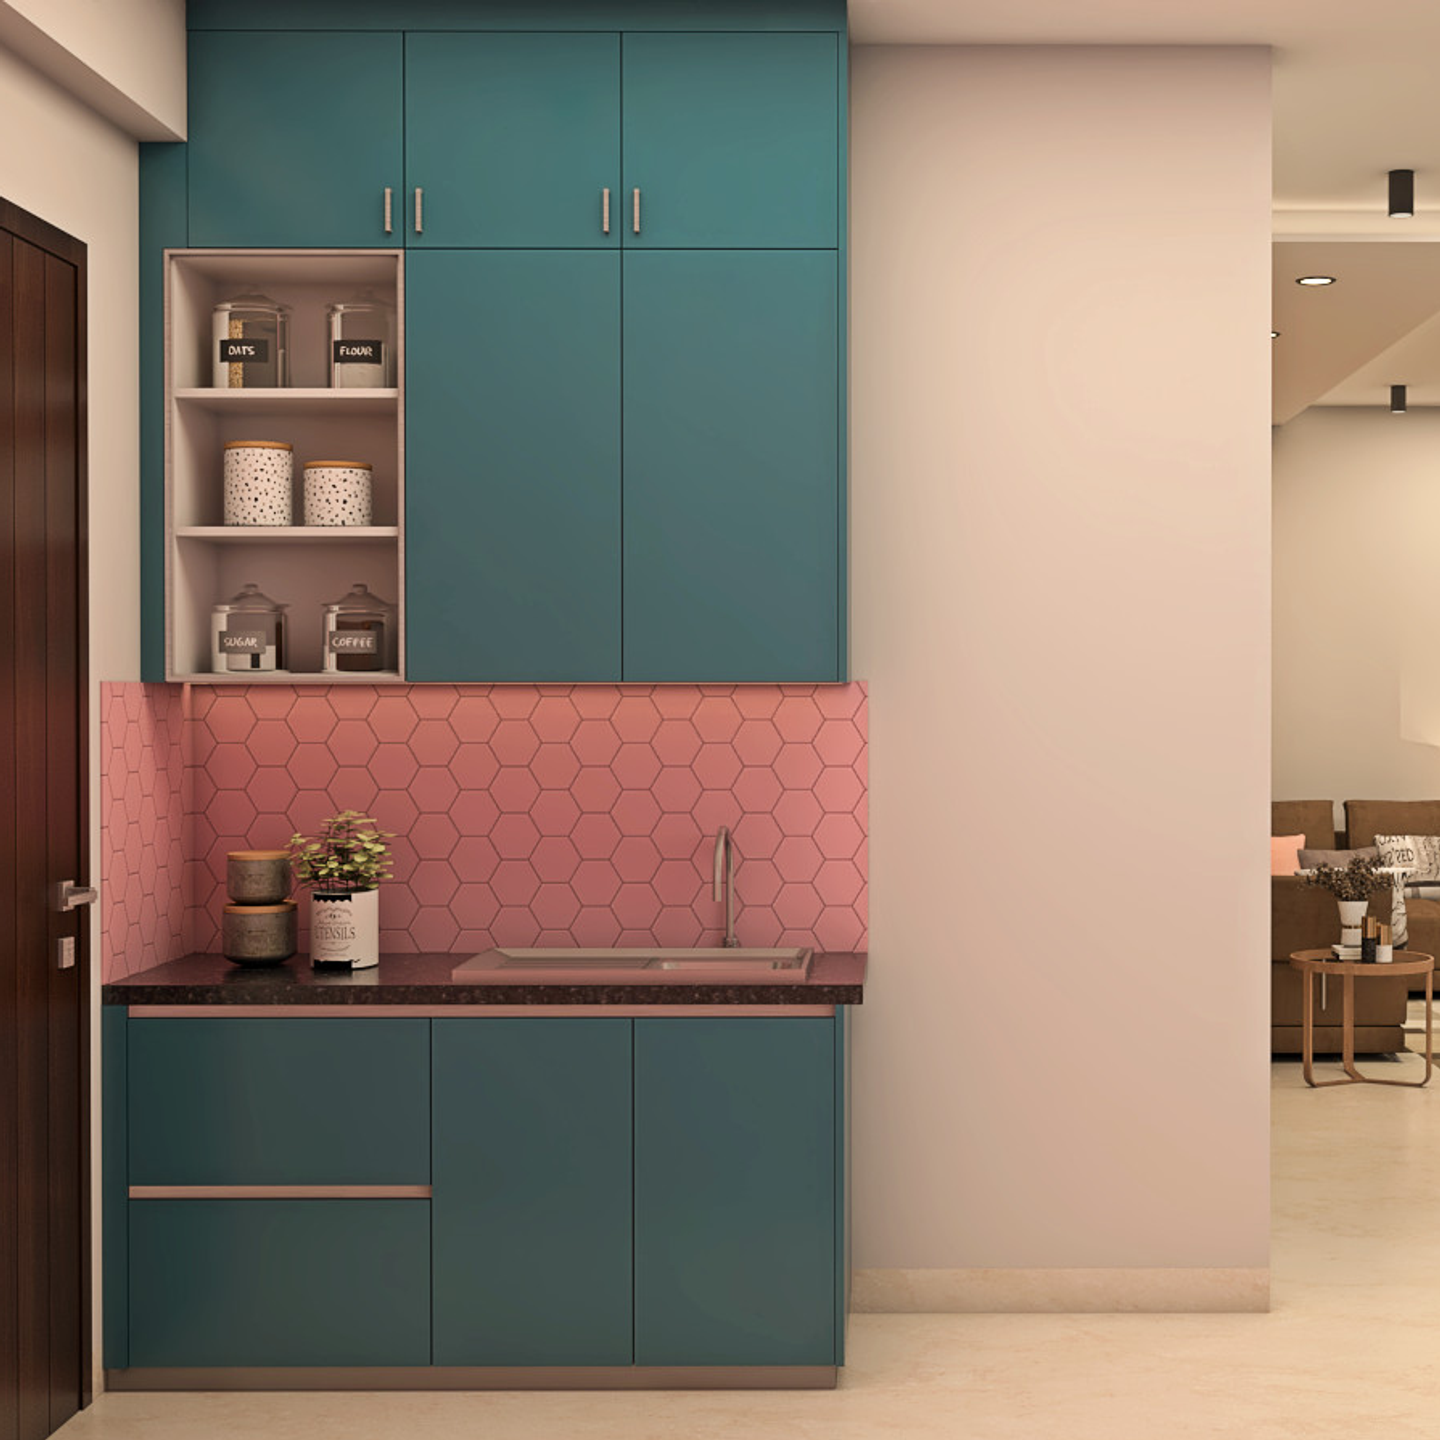 Spacious Modern Kitchen Design - Livspace